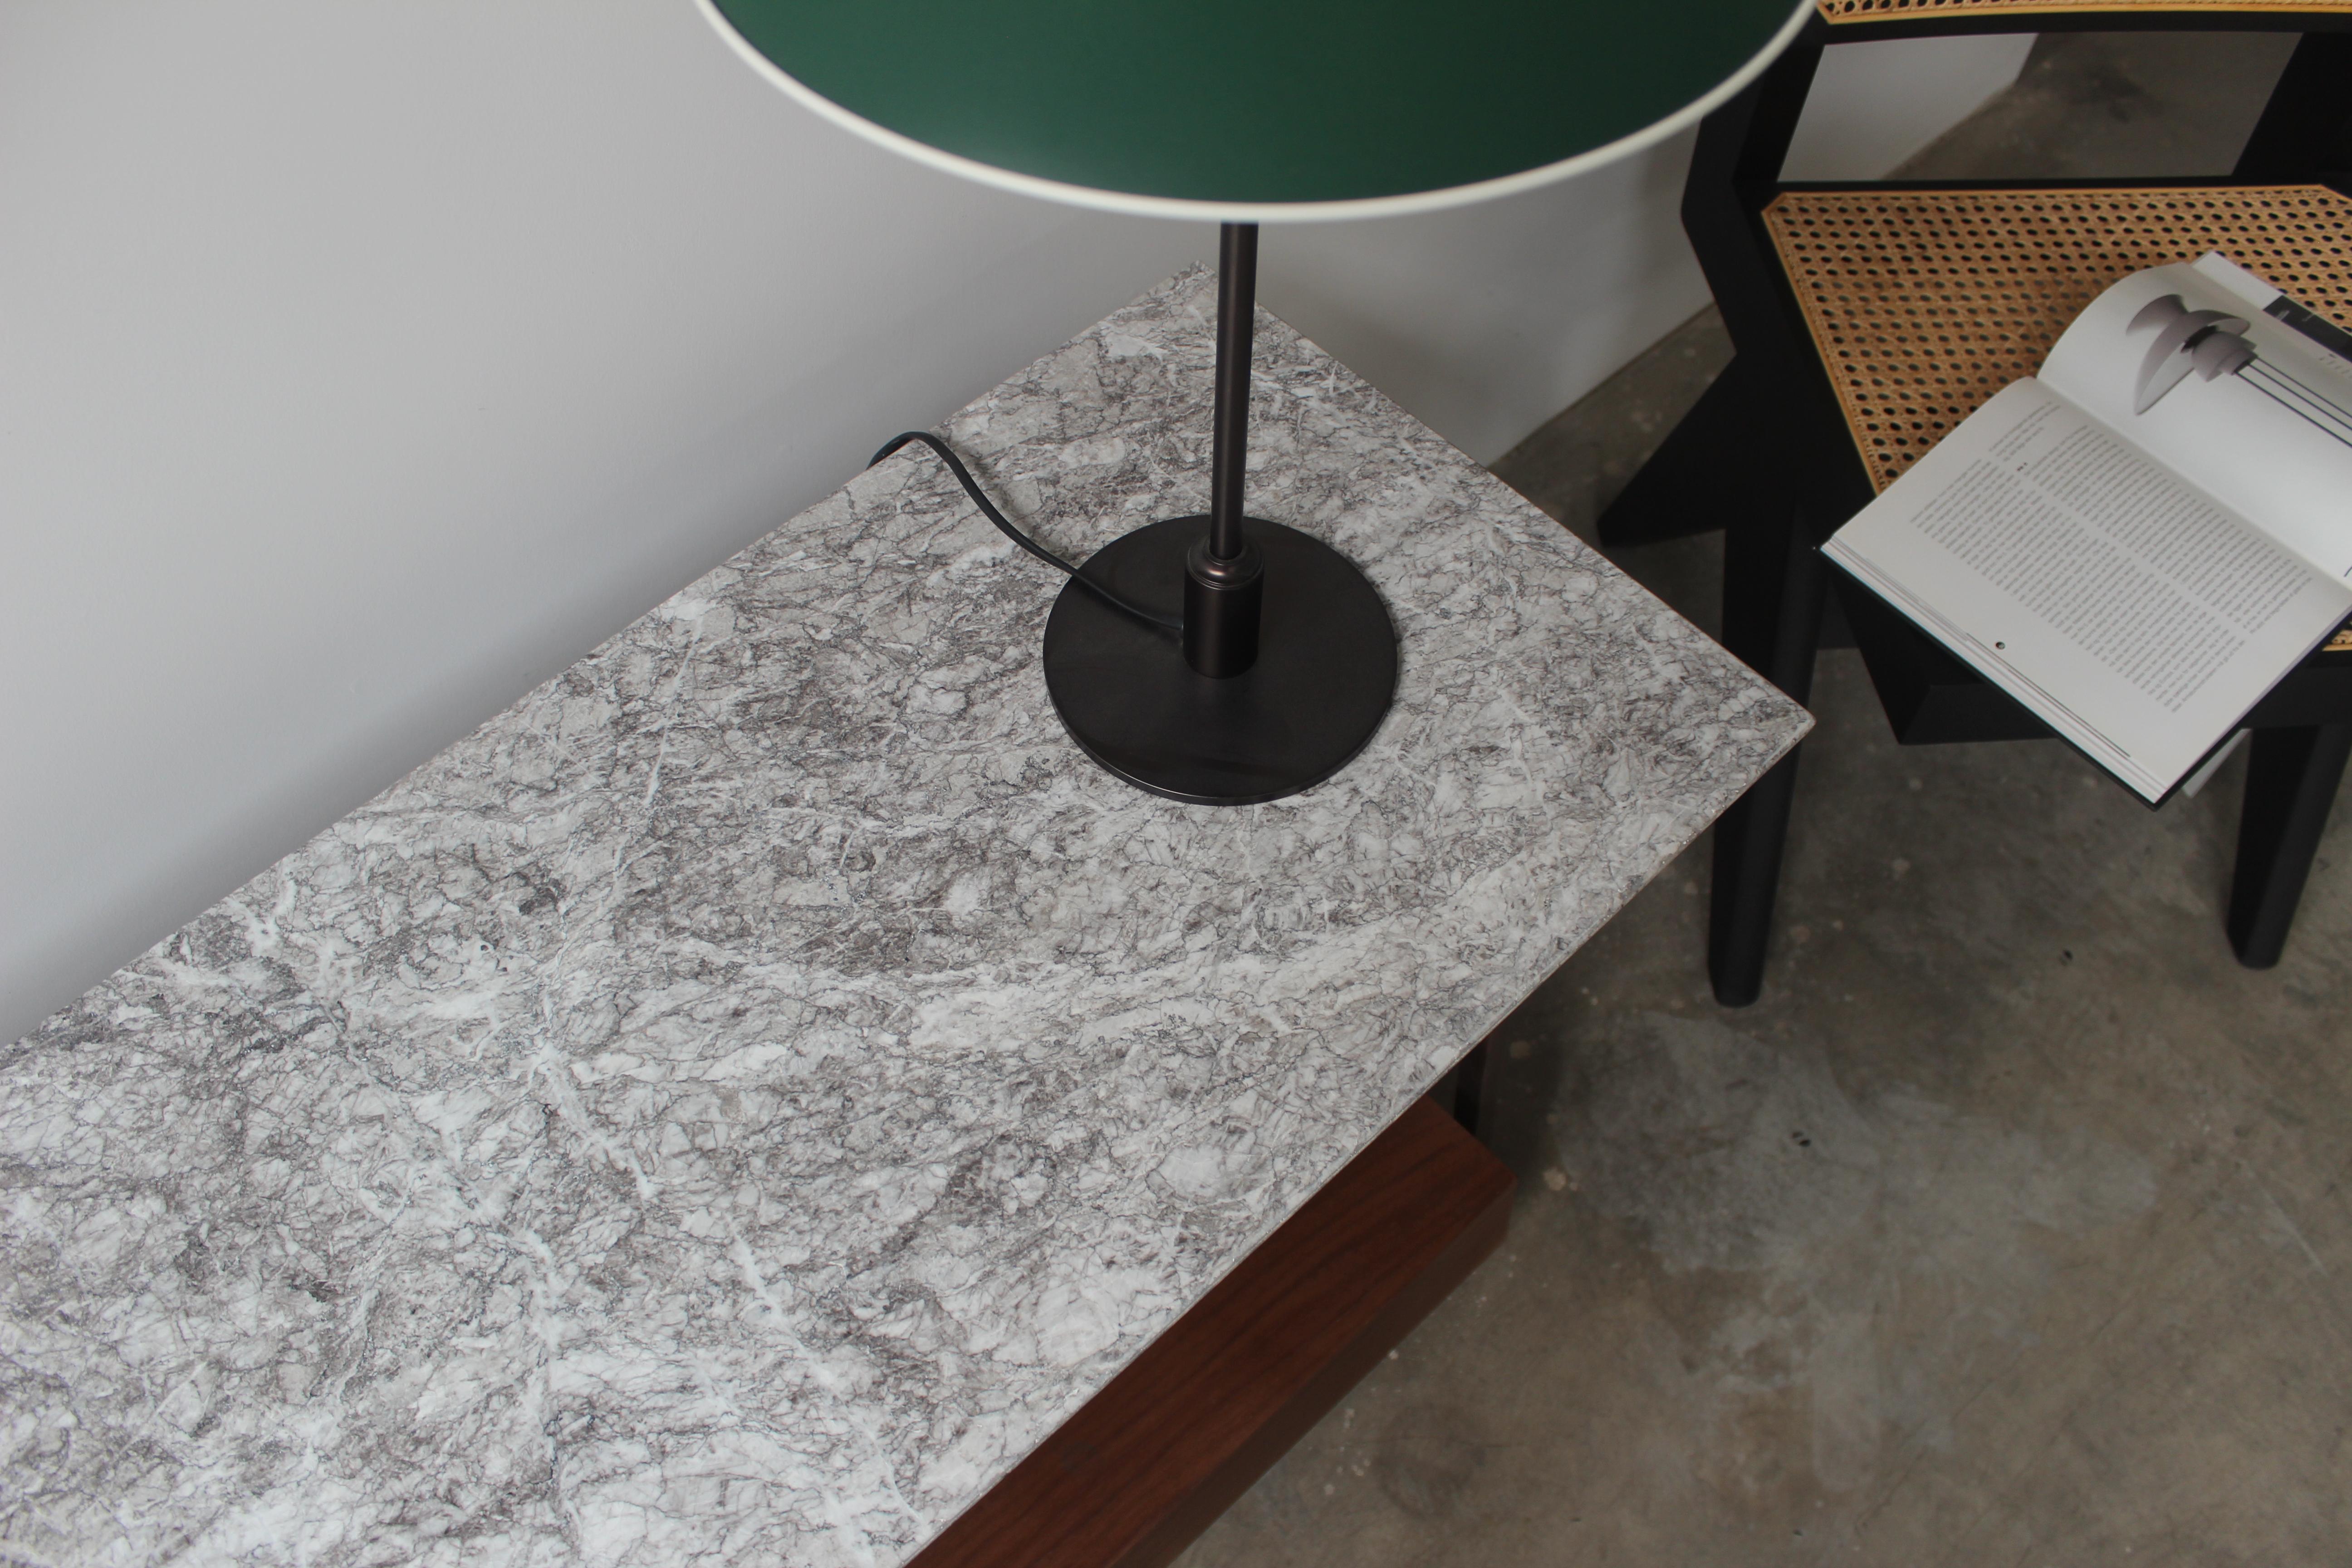 NORDST ANNE Console Table, Italian Green Lightning Marble, Danish Modern Design For Sale 4